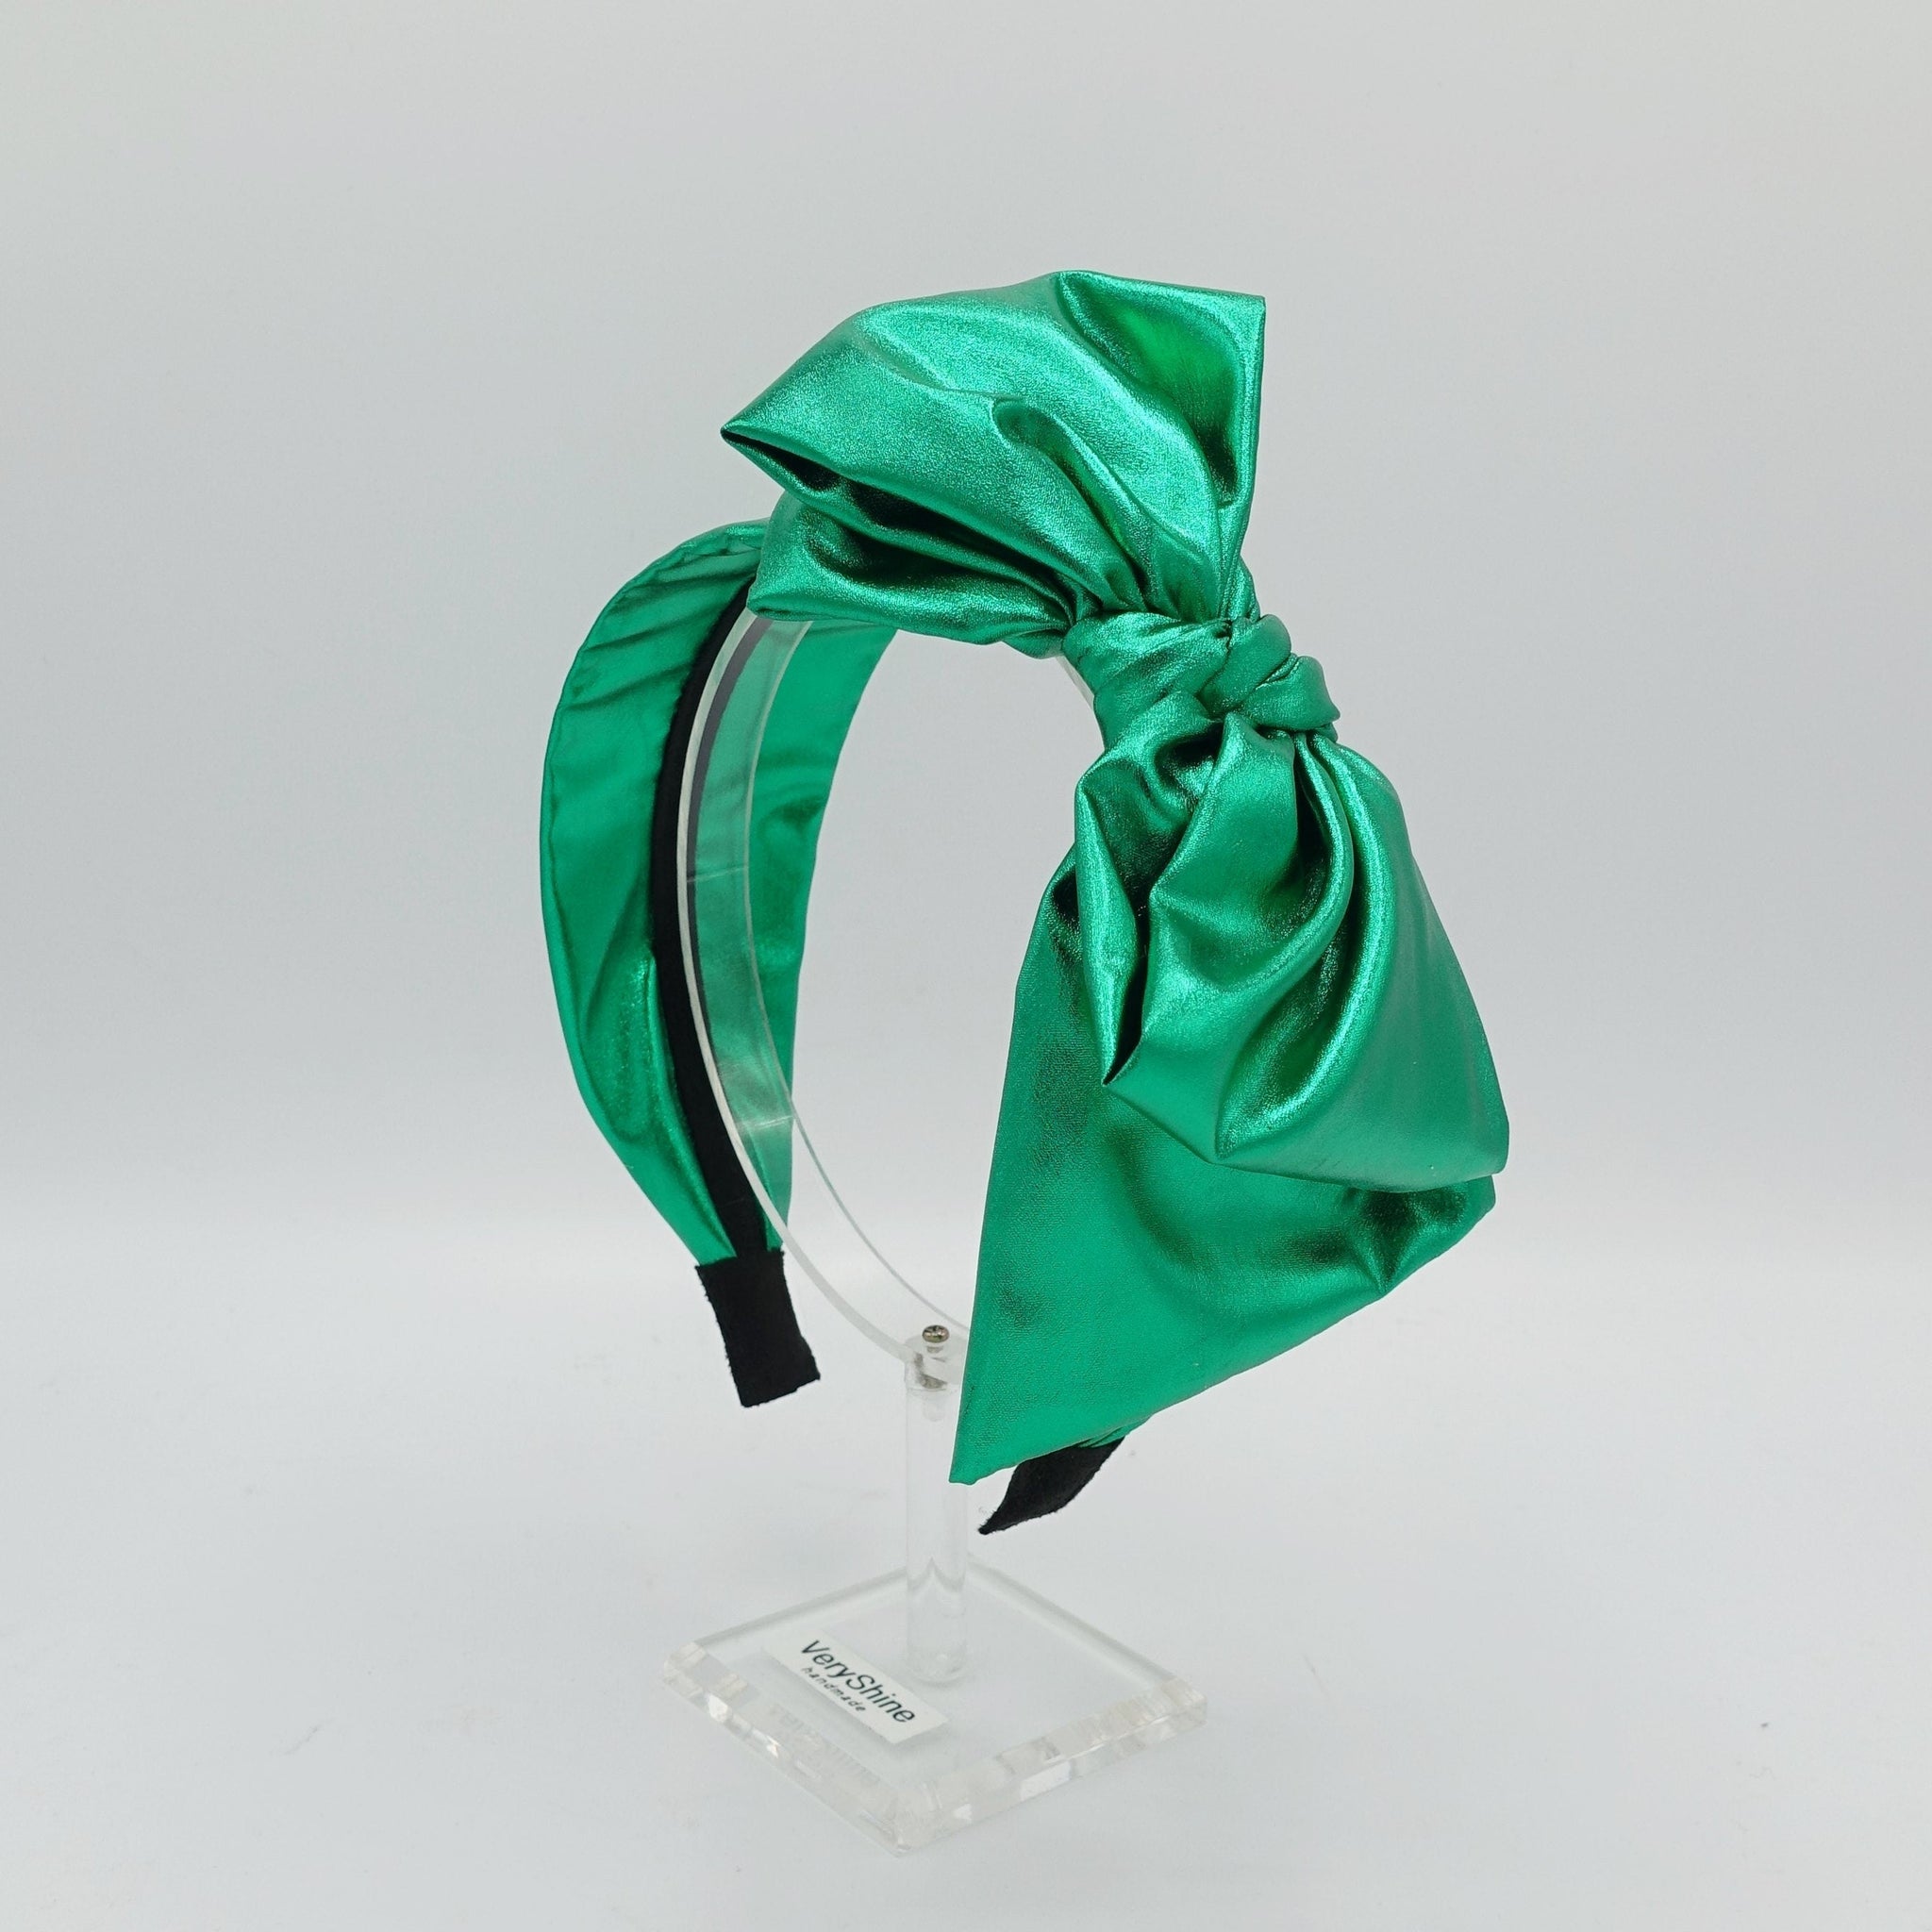 veryshine.com Headband Green metallic bow headband shiny fabric knotted hairband women hair accessories